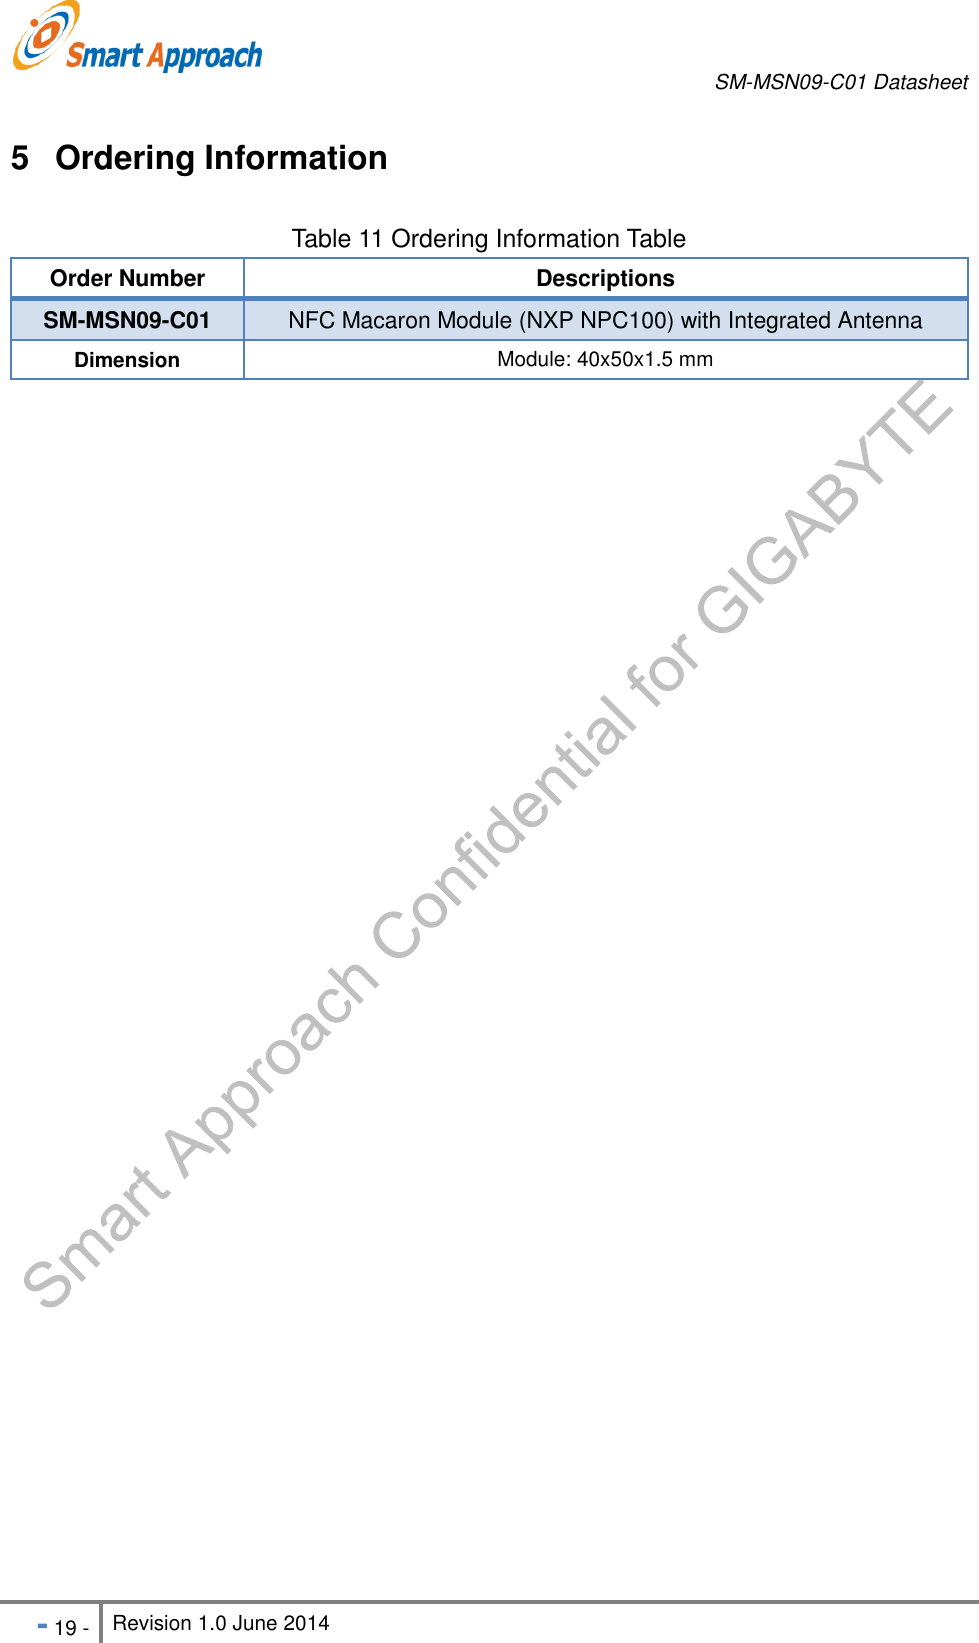       SM-MSN09-C01 Datasheet   - 19 - Revision 1.0 June 2014                                                            5  Ordering Information Table 11 Ordering Information Table Order Number Descriptions SM-MSN09-C01 NFC Macaron Module (NXP NPC100) with Integrated Antenna Dimension Module: 40x50x1.5 mm  